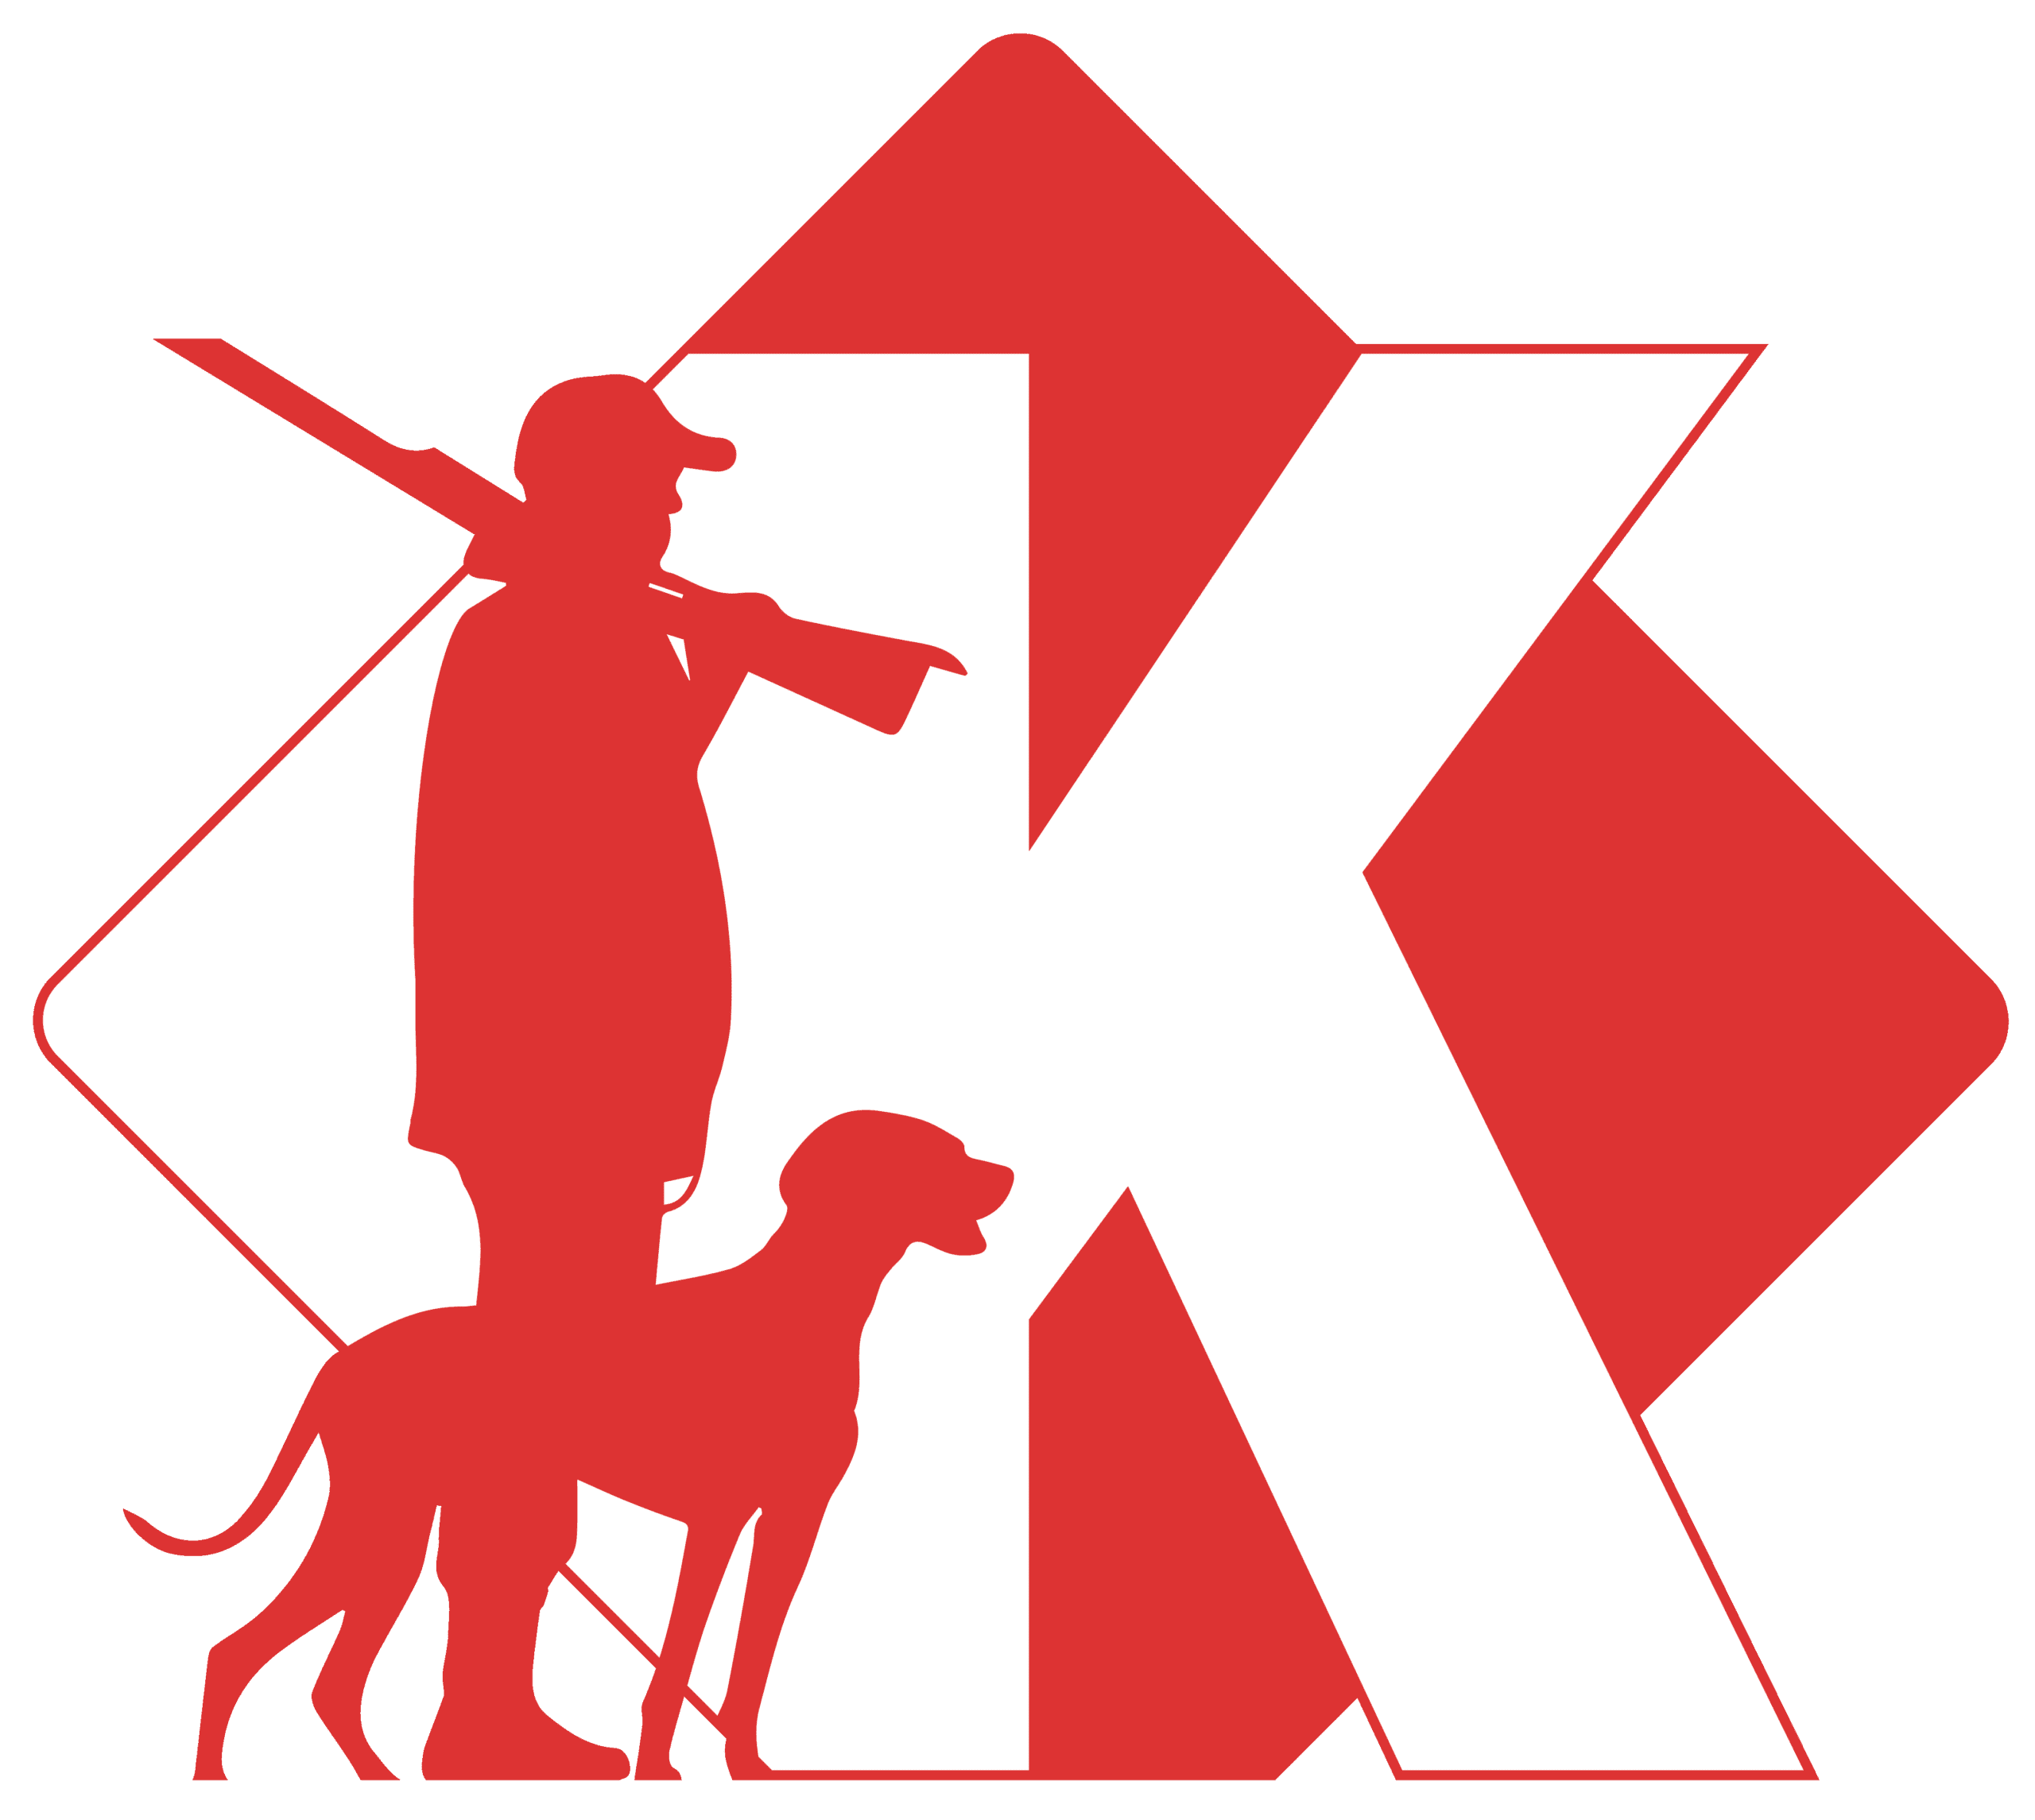 Kynigesia logo